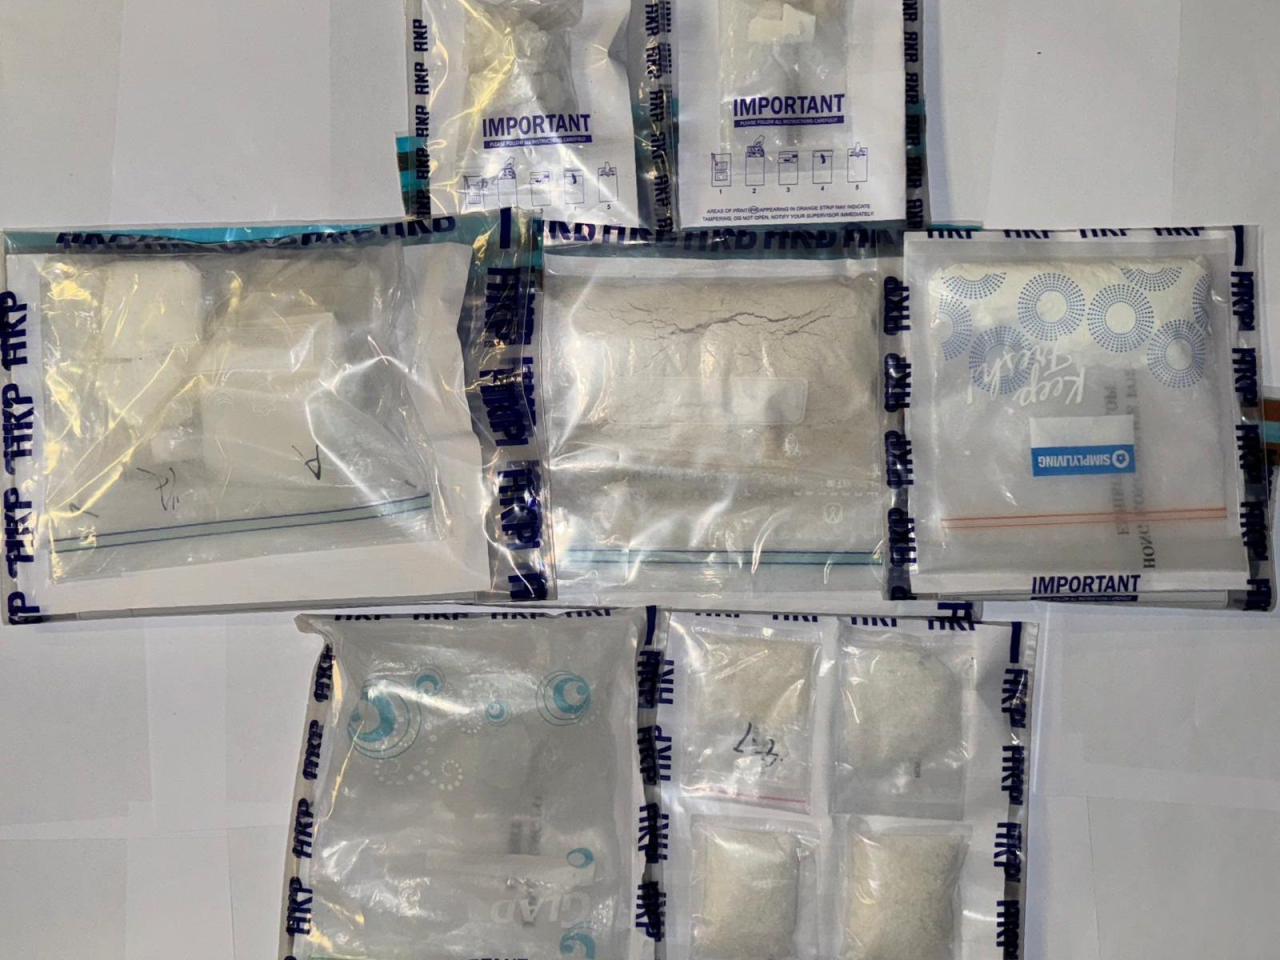 Police discover suspected Yau Ma Tei drug workshop